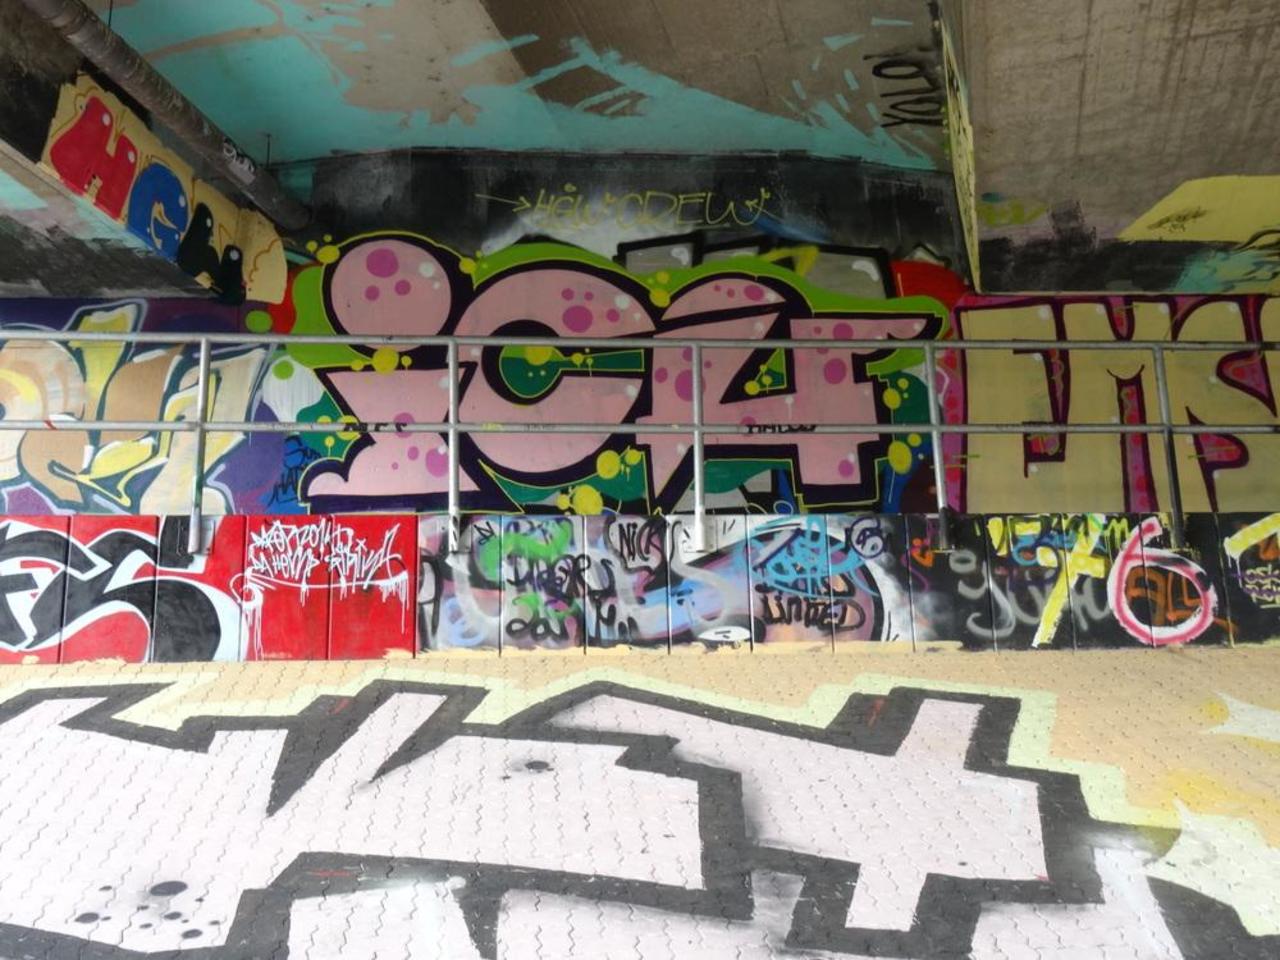 Graffiti Karlsruhe, Germany
#streetart #art #urbanart #graffiti #karlsruhe http://t.co/XCIghwh9P2